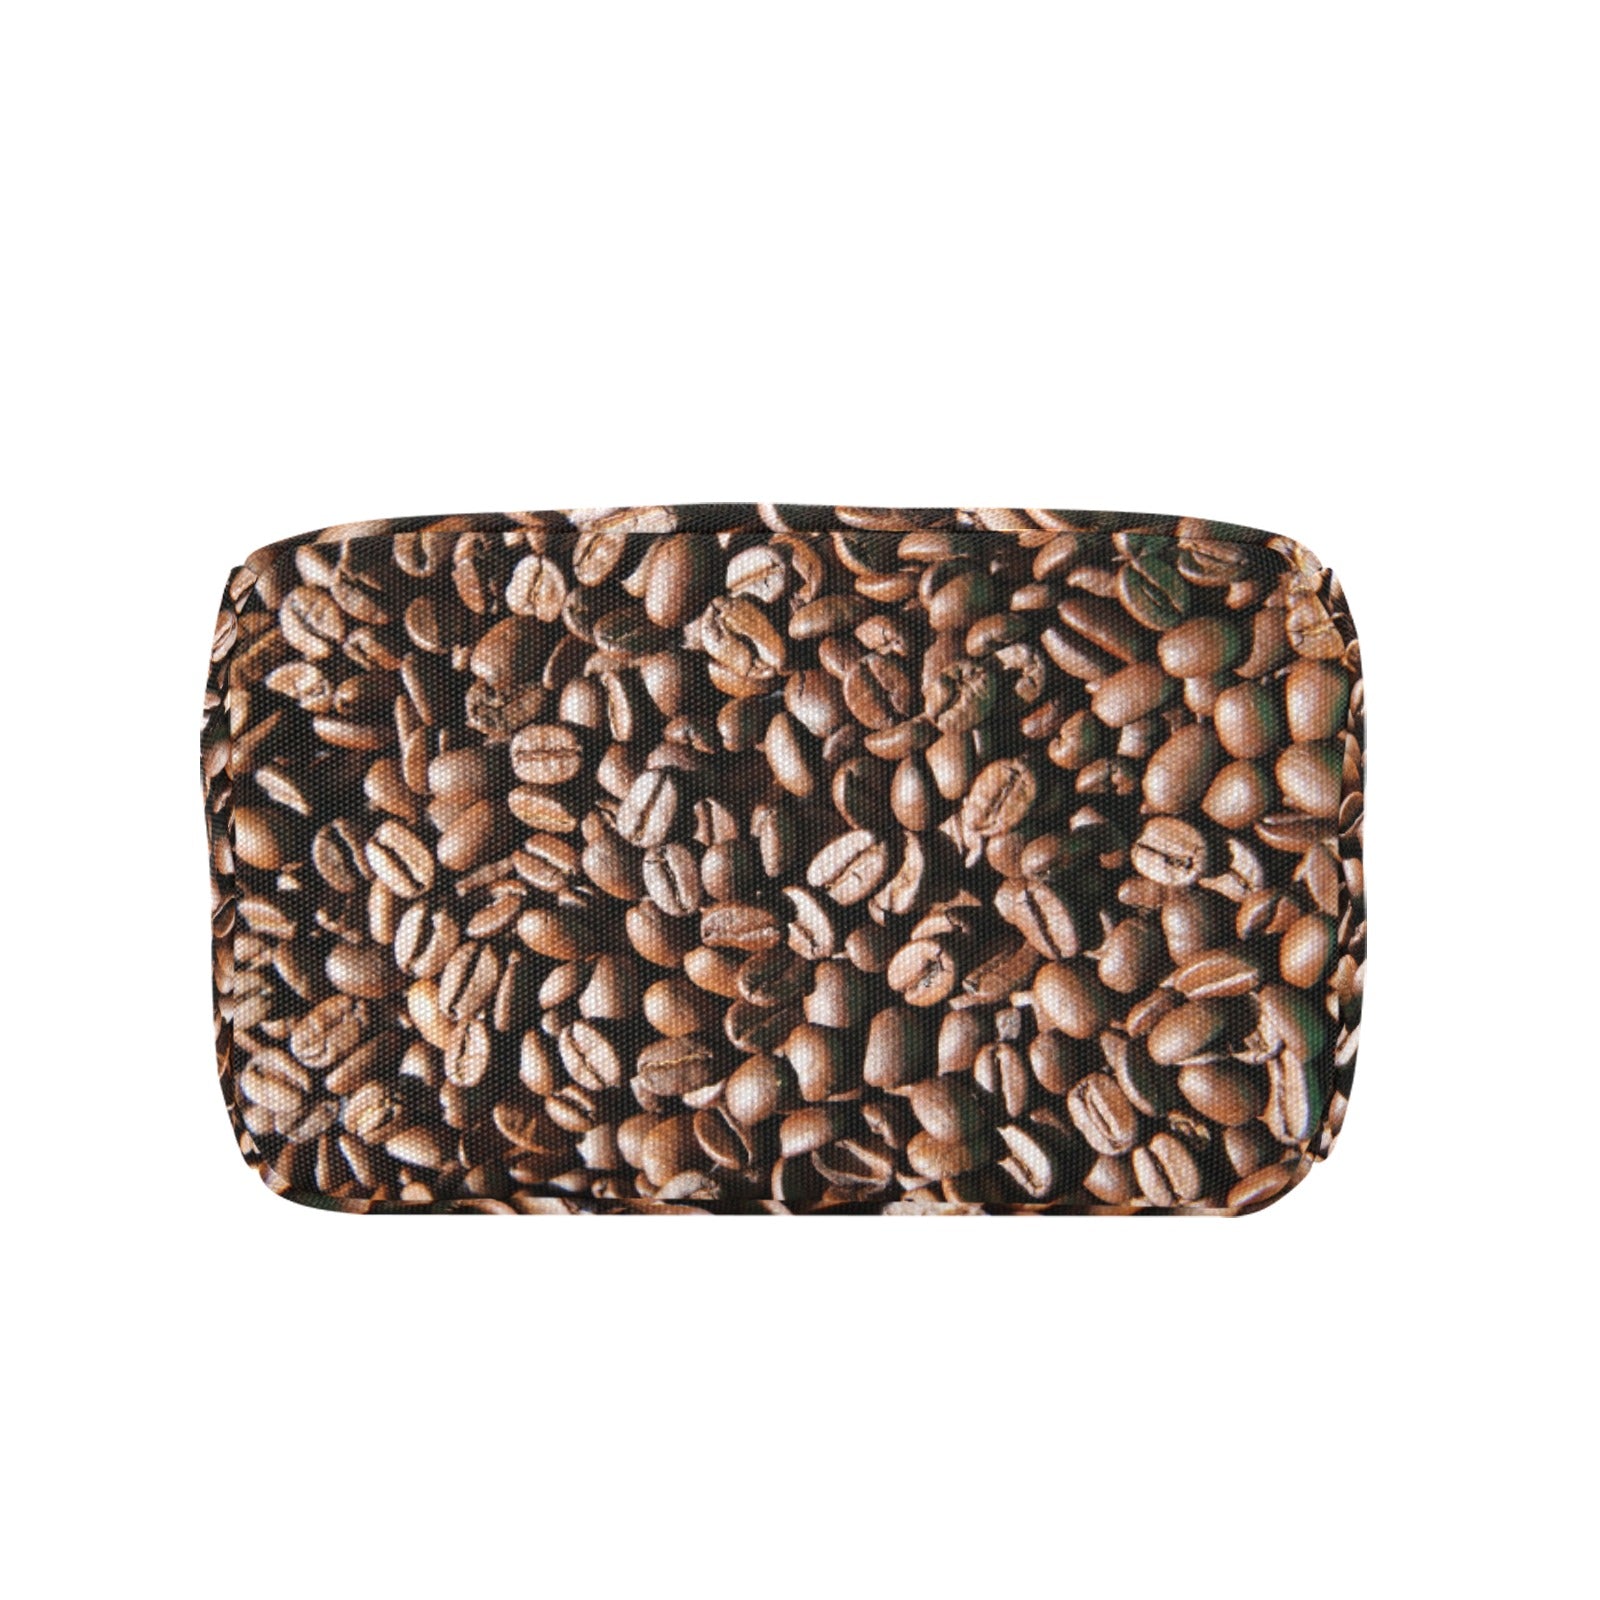 Coffee Beans Insulated Zipper Lunch Bag